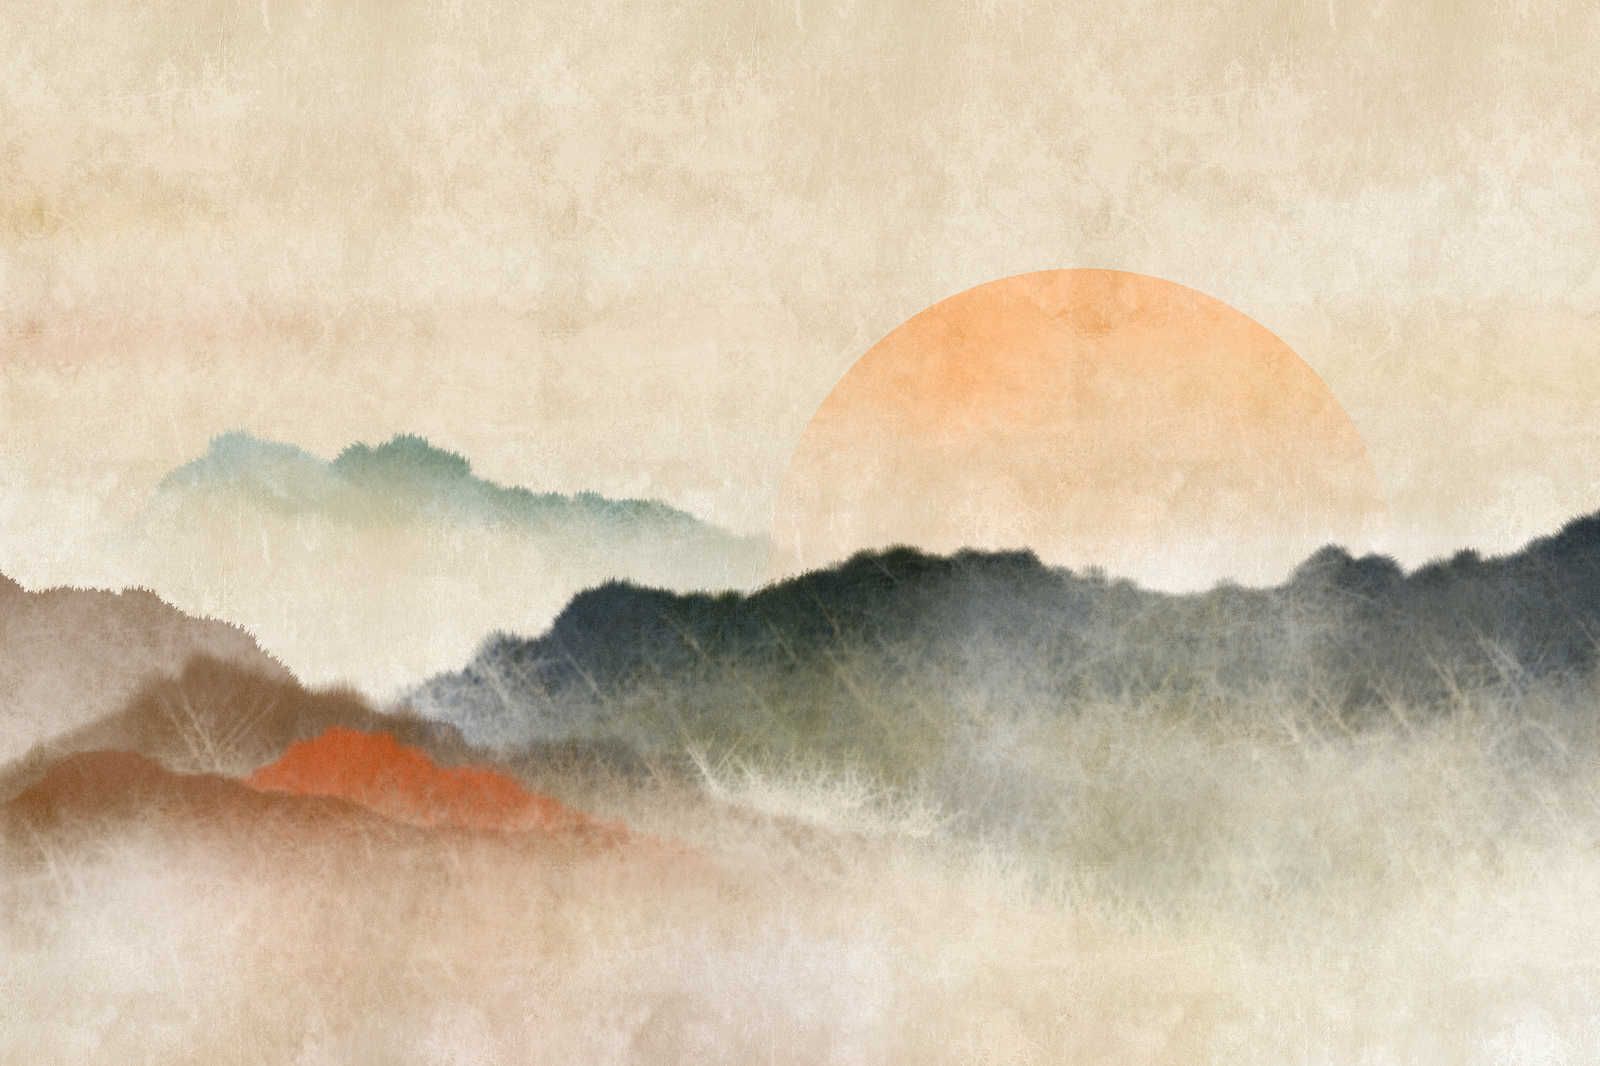             Akaishi 3 - Pintura en lienzo Amanecer, Asia Style Art Print - 1.20 m x 0.80 m
        